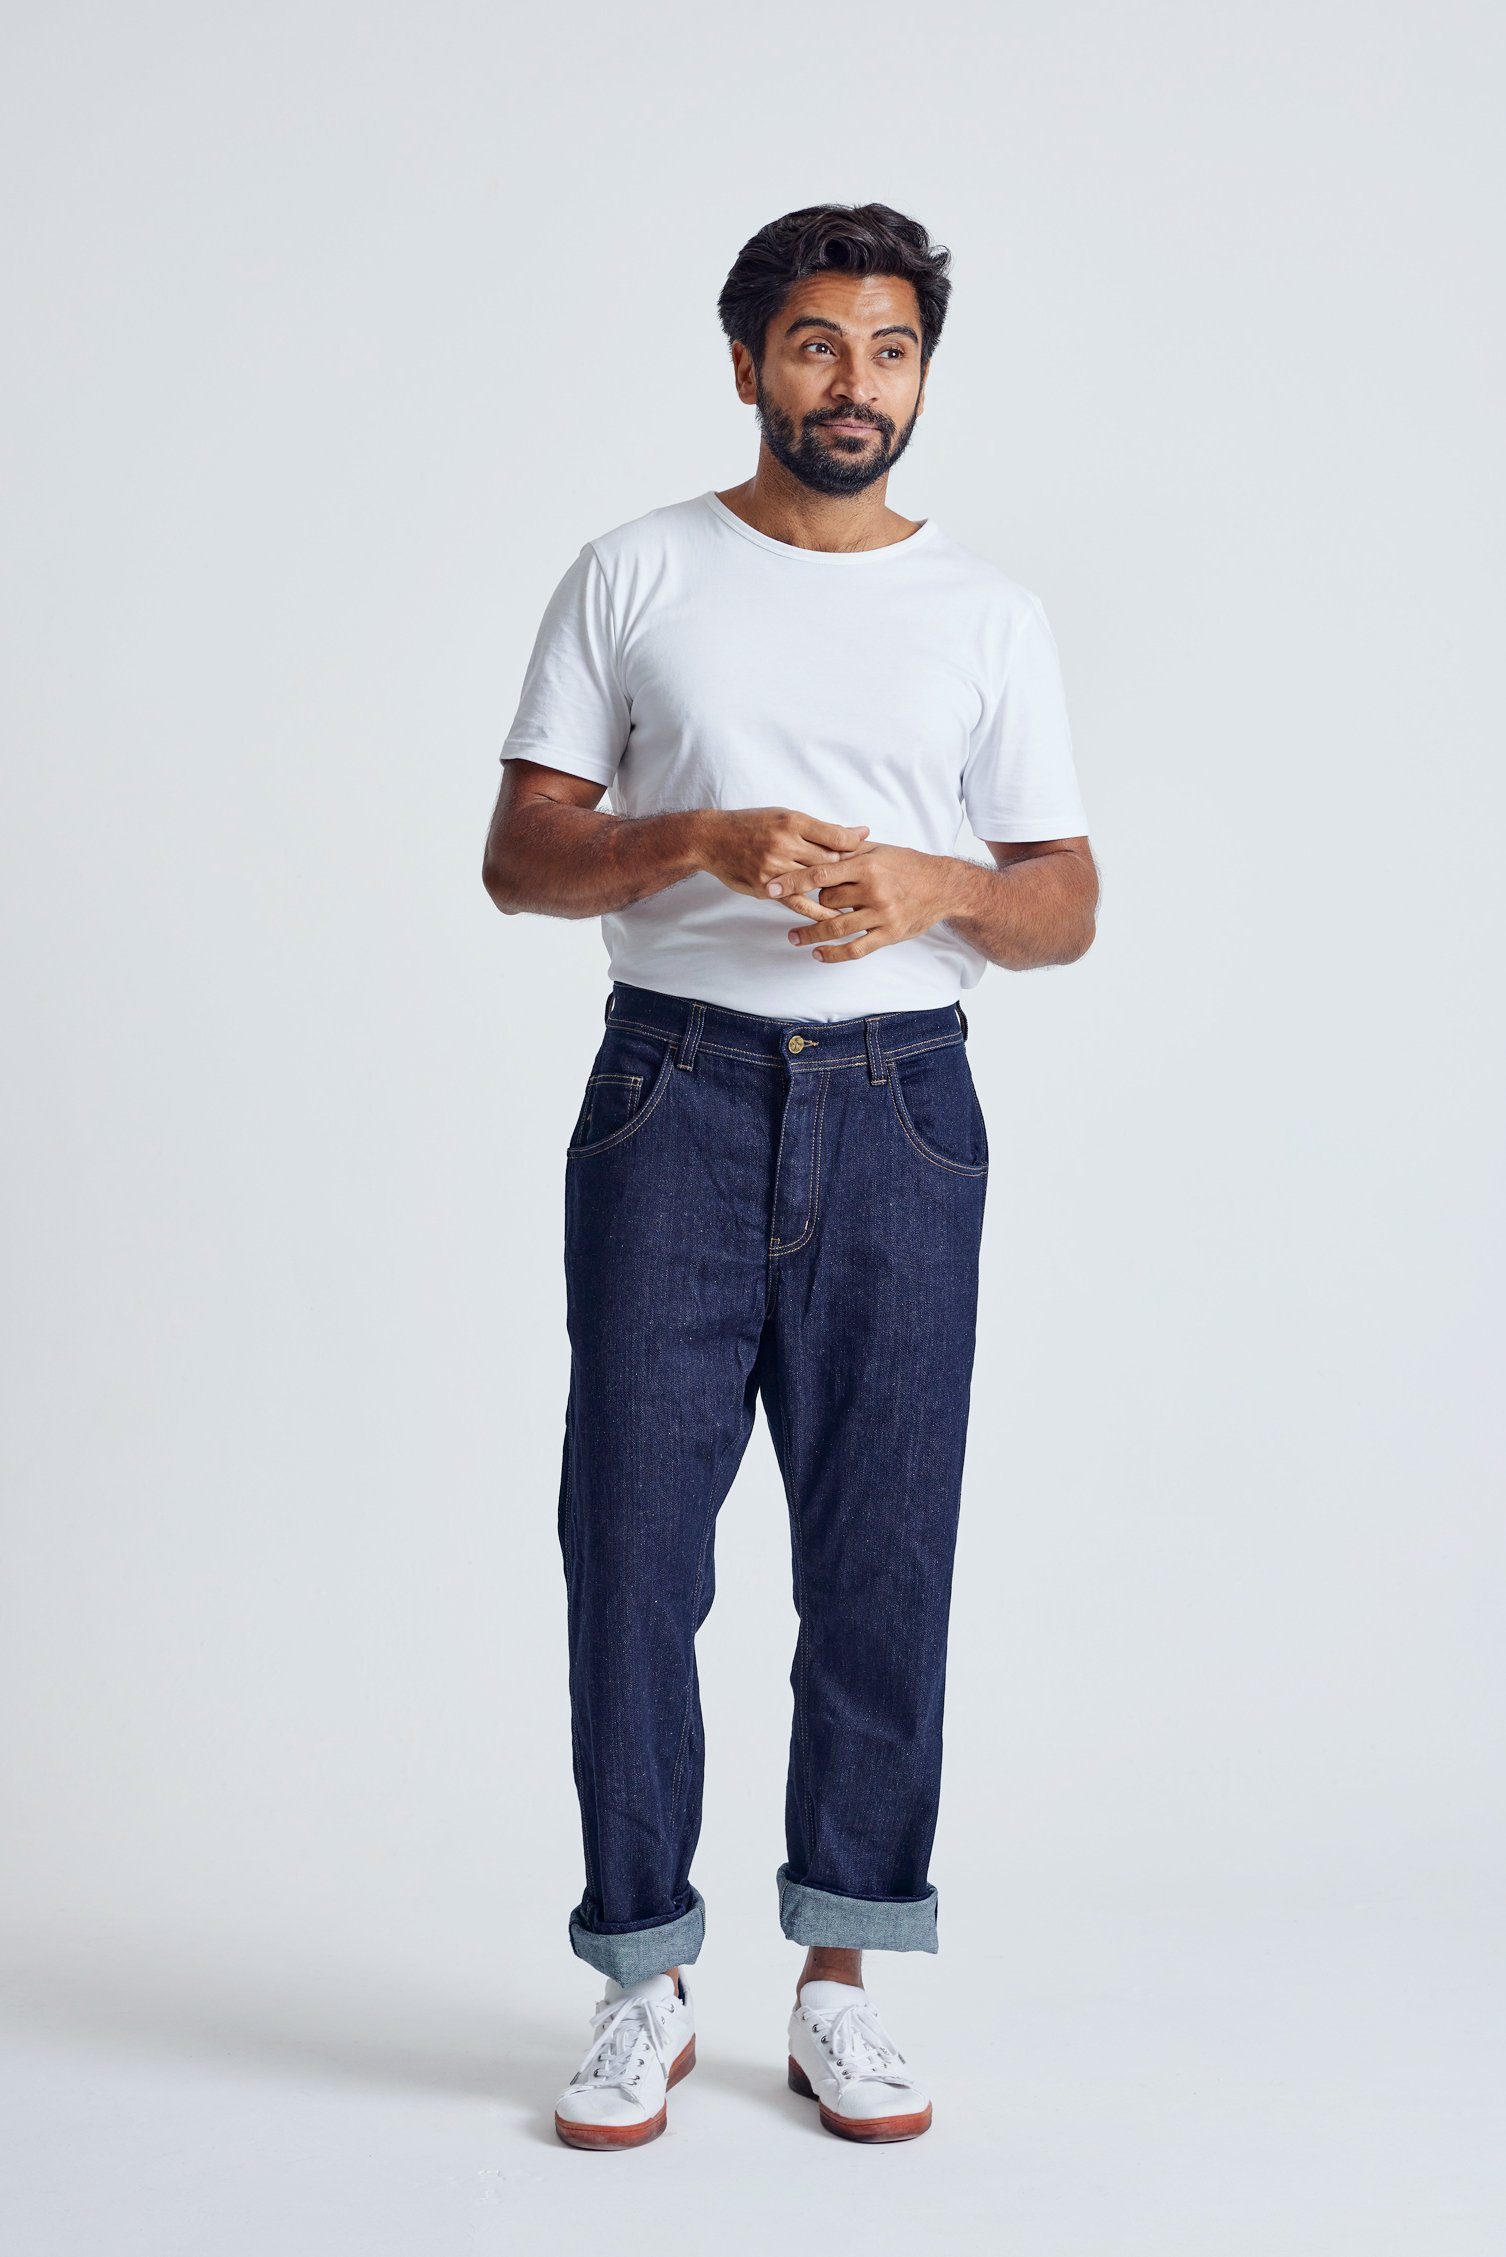 SATCH Rinse - GOTS Organic Cotton Jeans by Flax & Loom, 38 / Regular